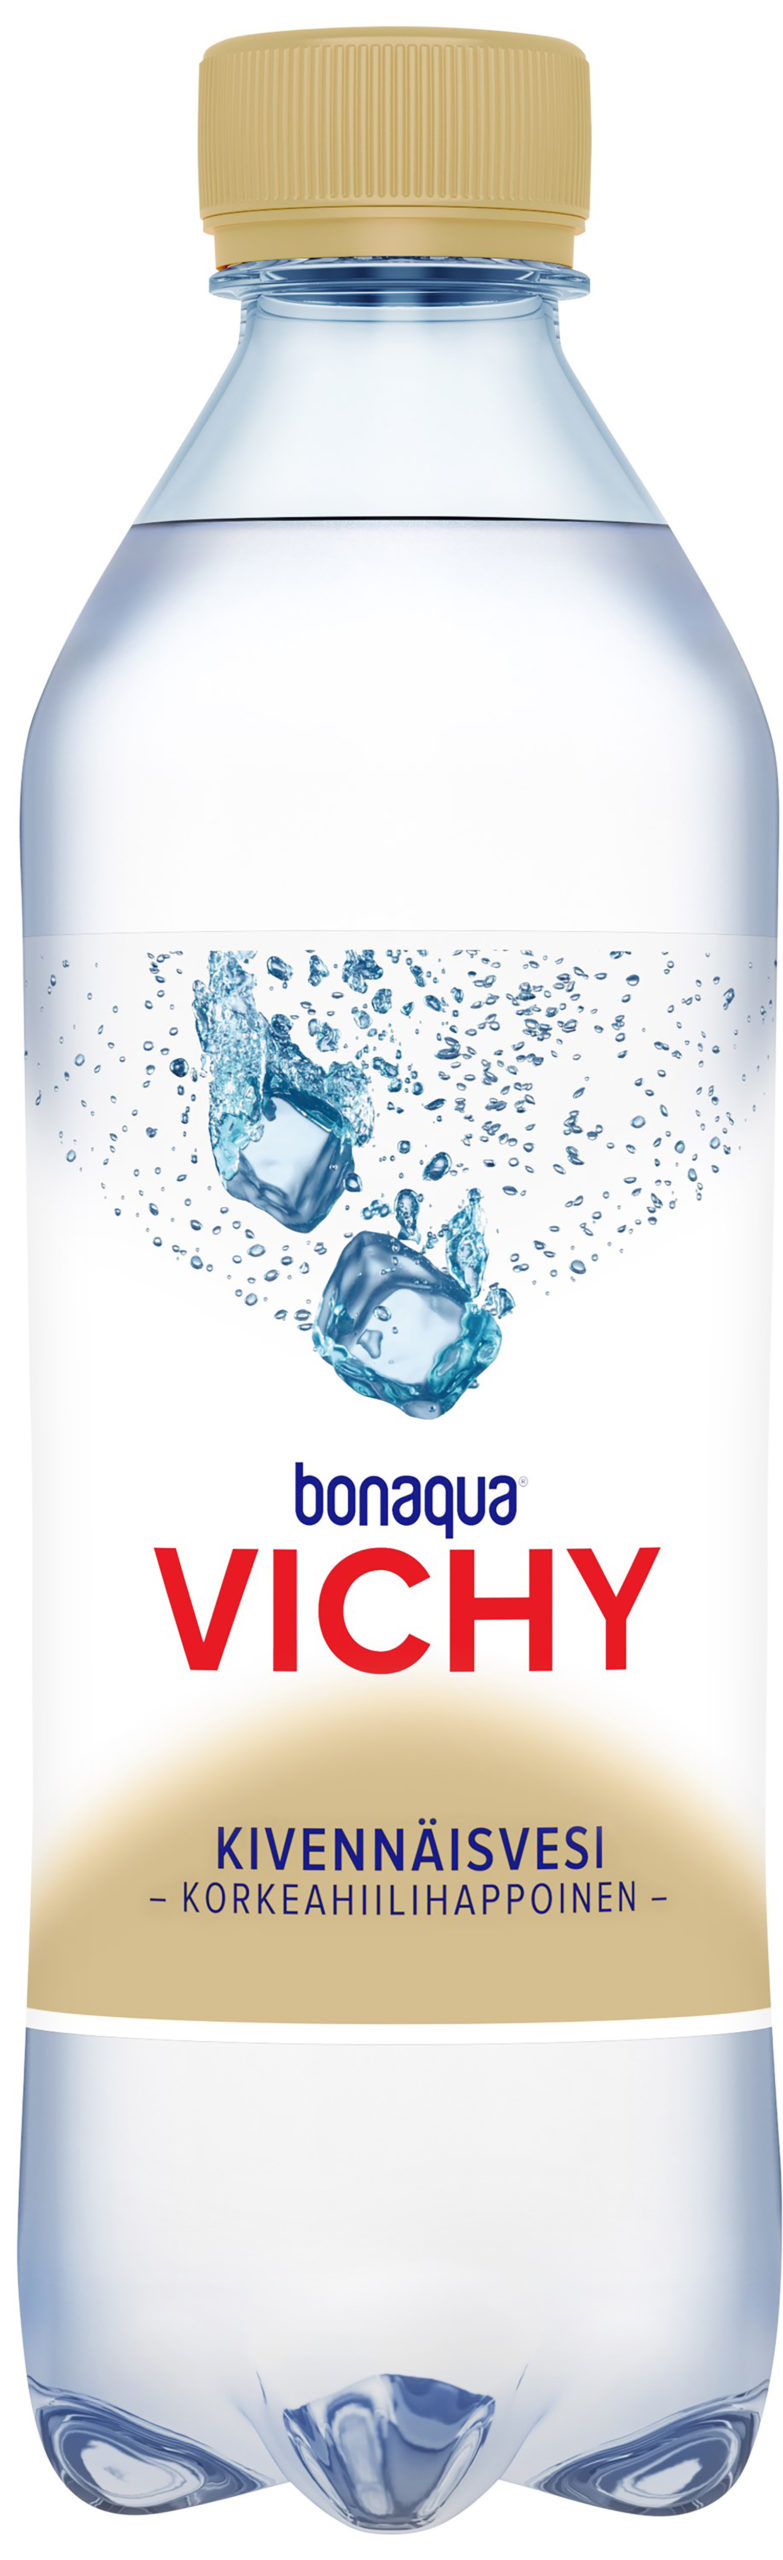 Sinebrychoff Bonaqua Vichy plastic bottle